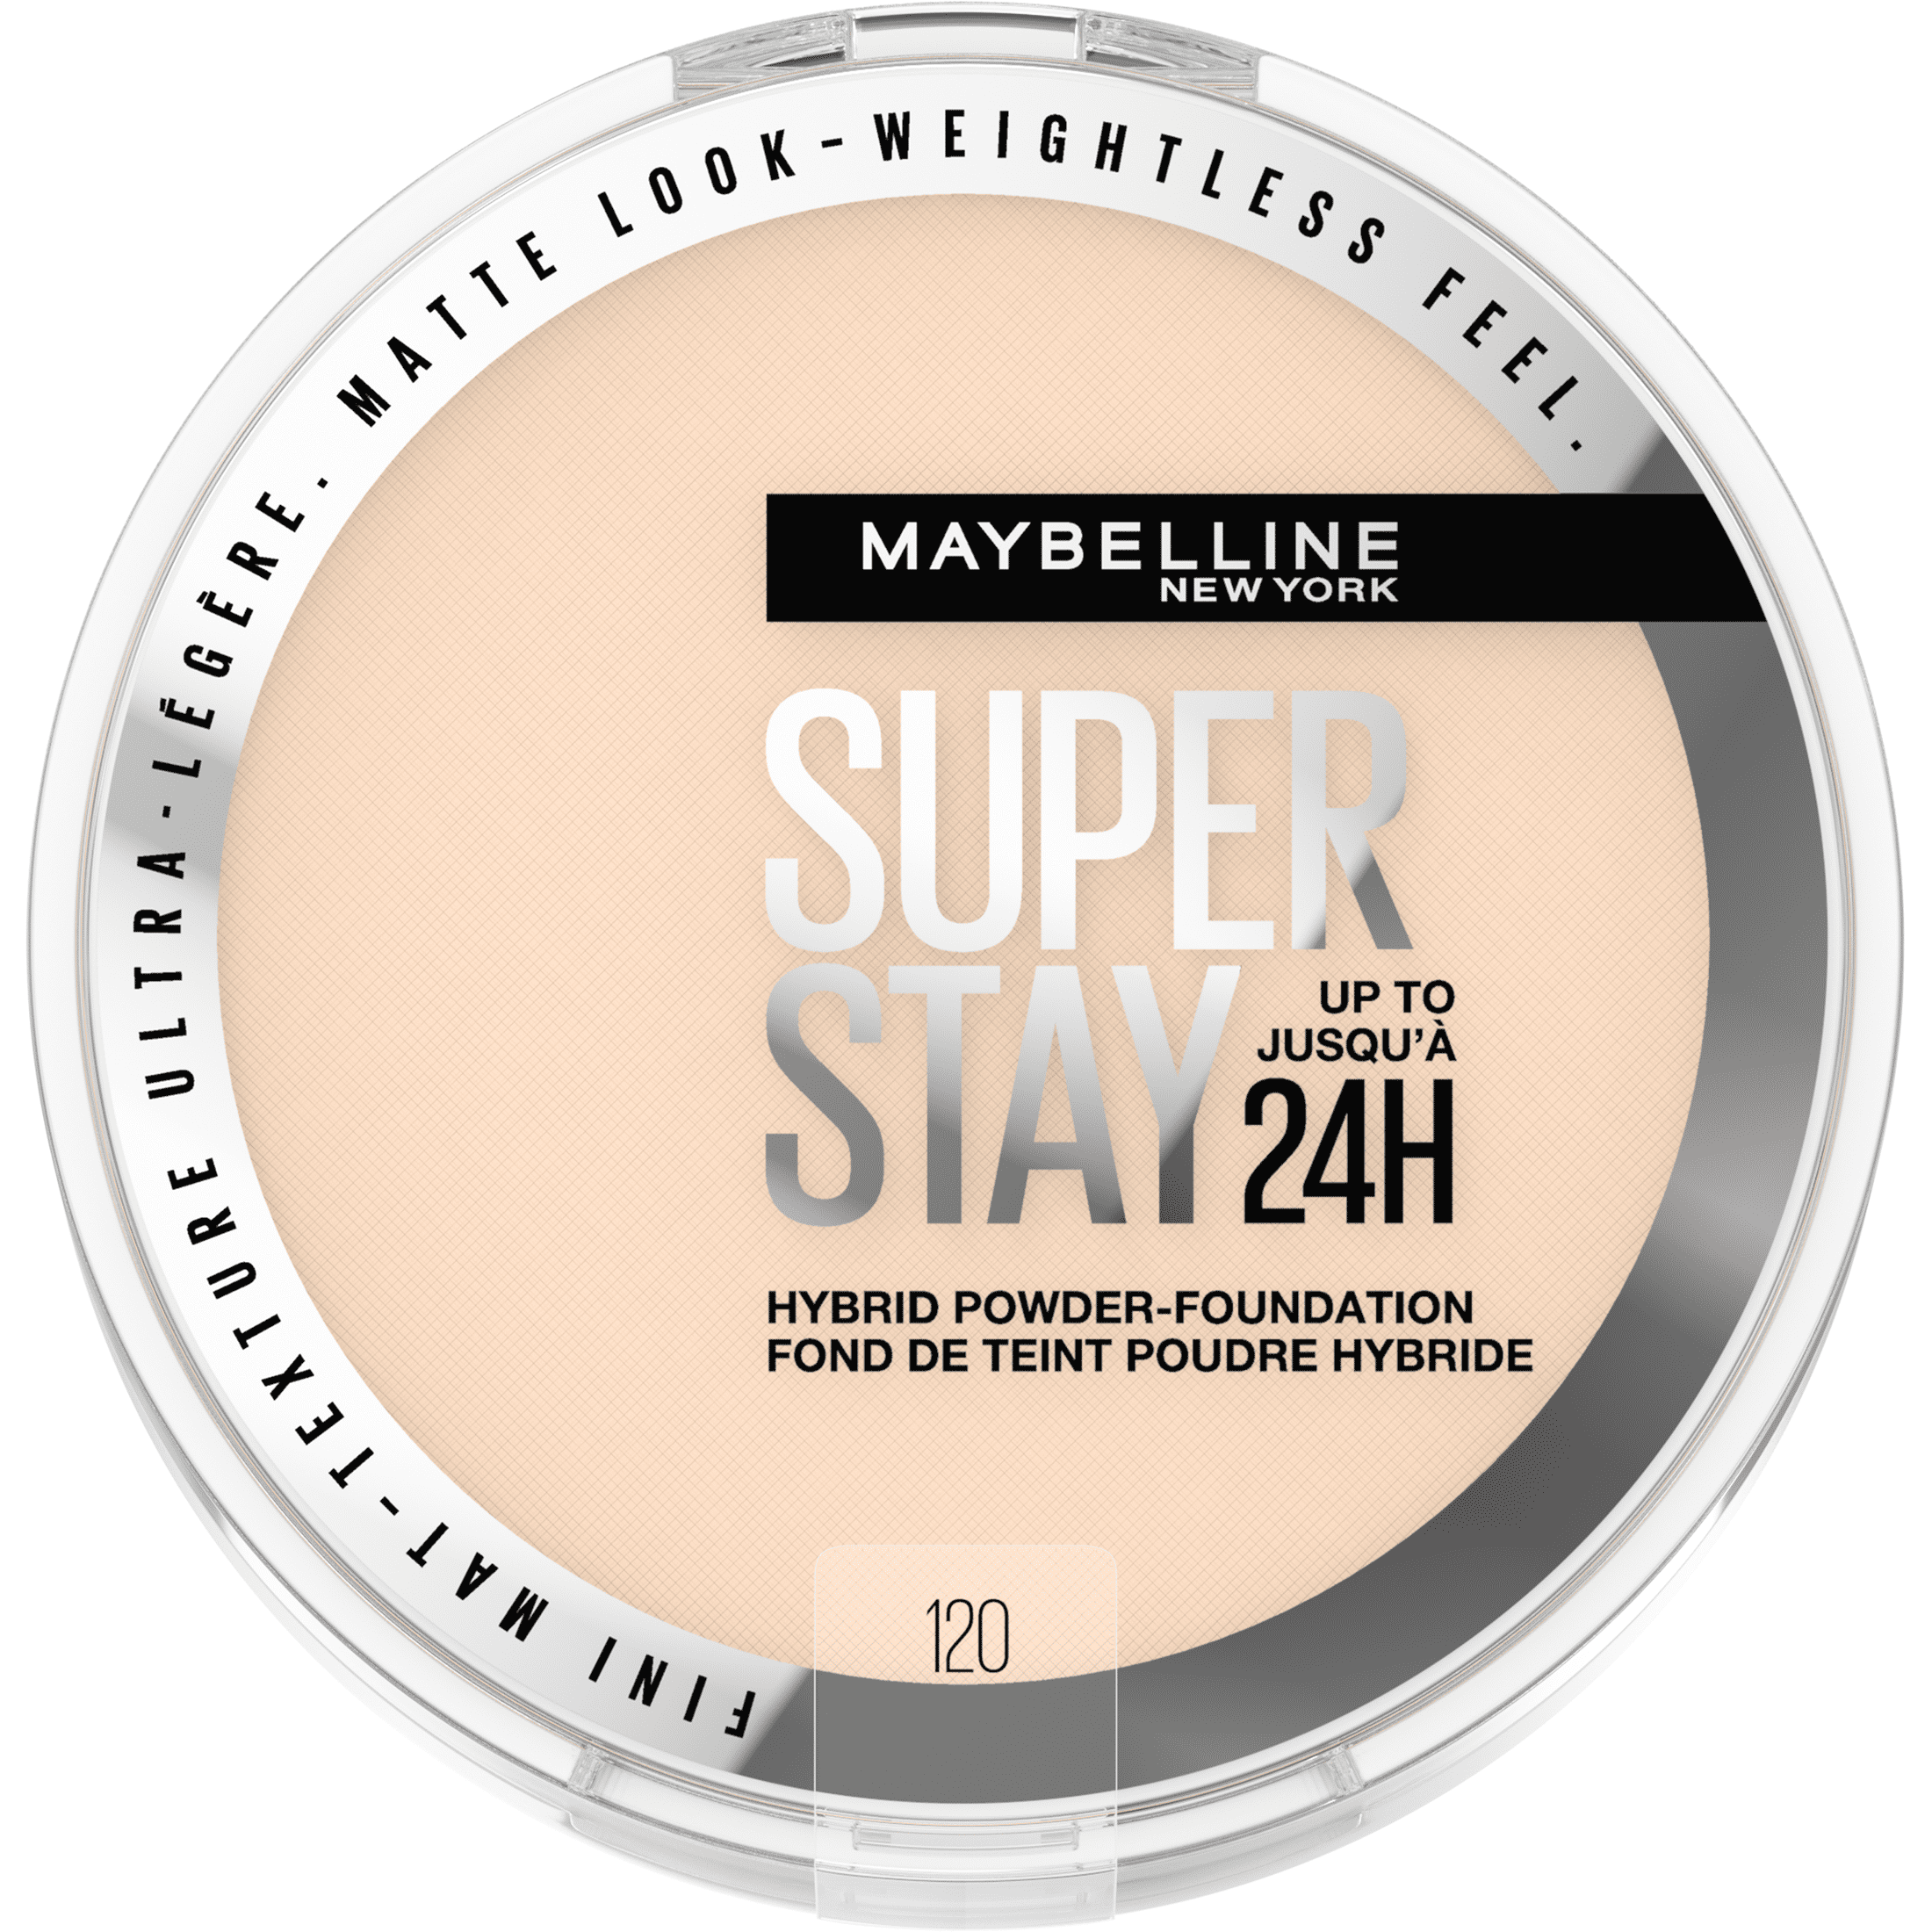 Maybelline Super Stay Up to 24hr Hybrid Powder-Foundation - 128